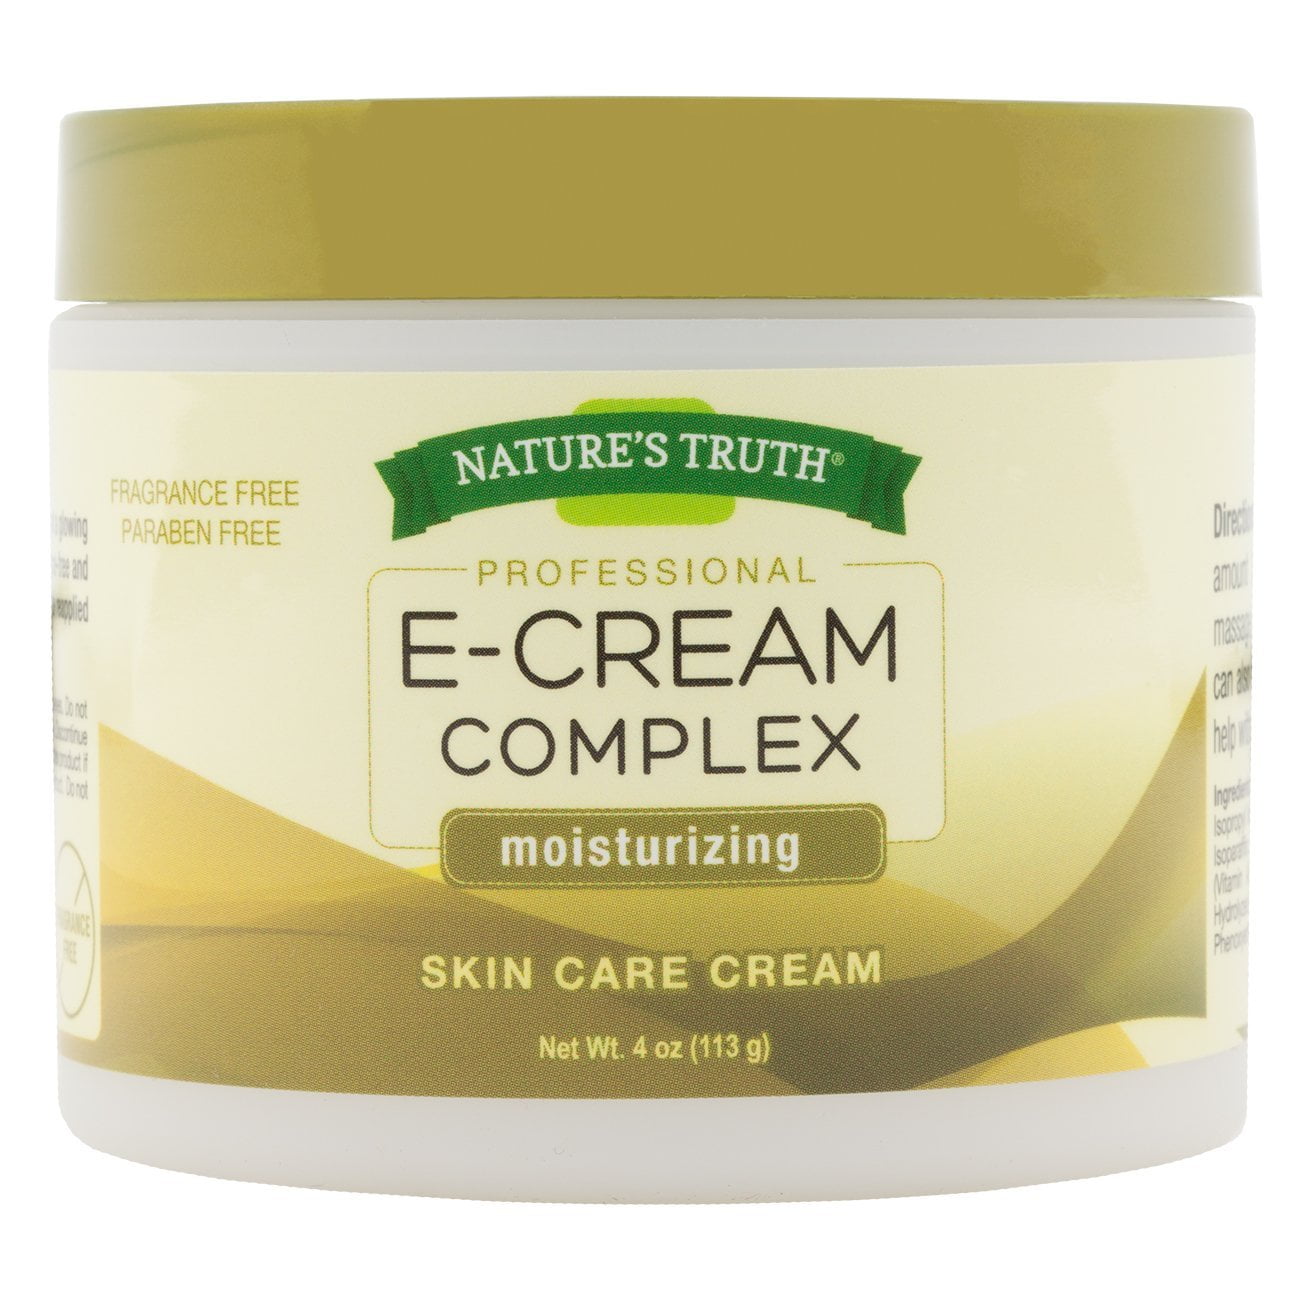 Nature's Truth Professional E-Cream Moisturizing Skin Care Cream, 4 Oz. Walmart.com